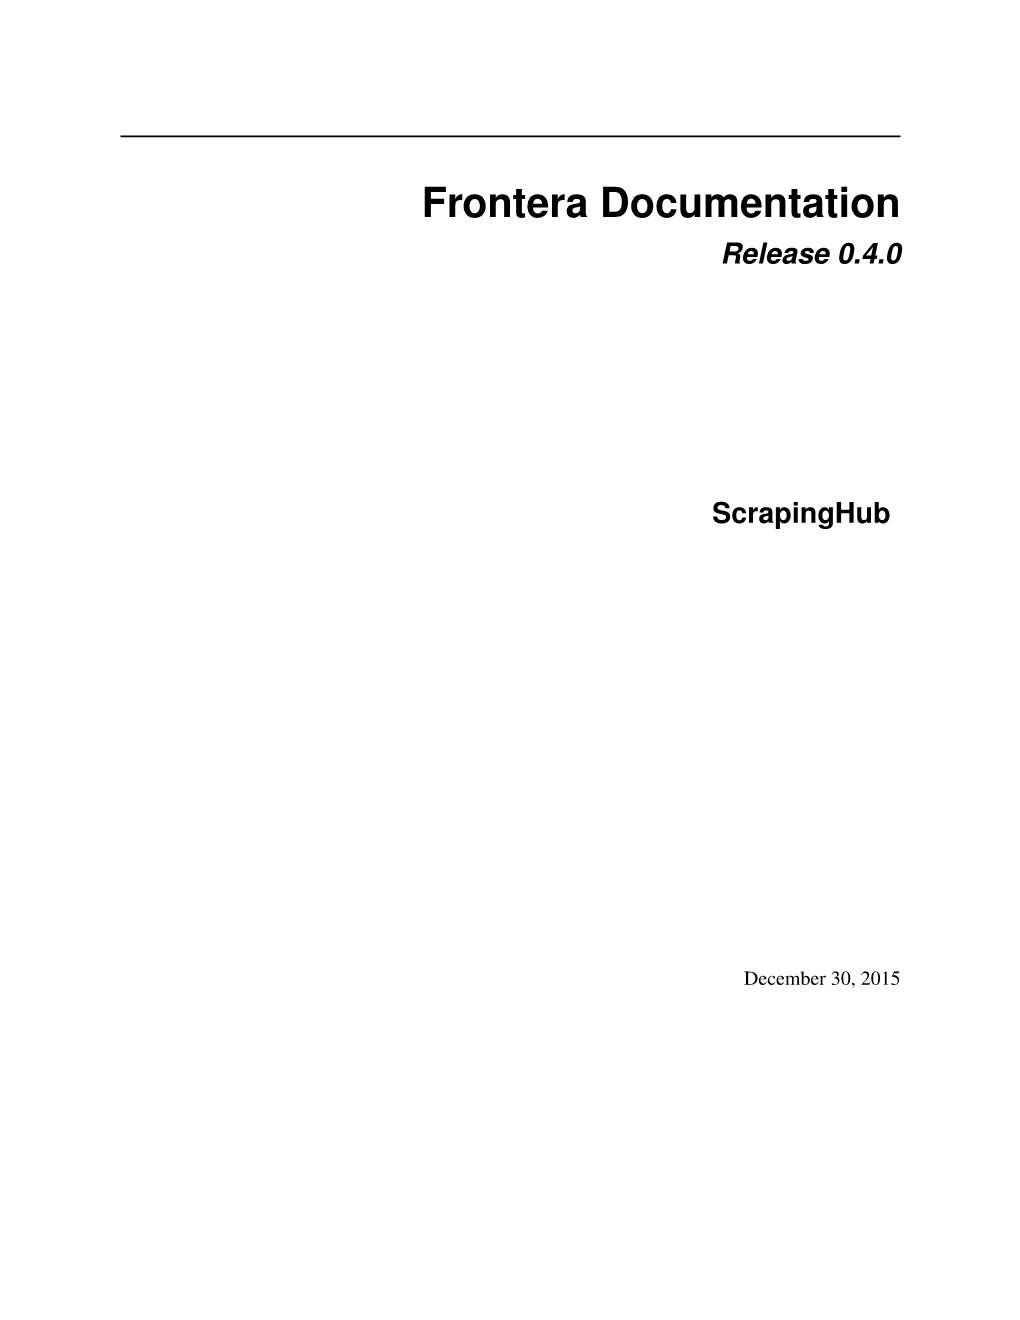 Frontera Documentation Release 0.4.0